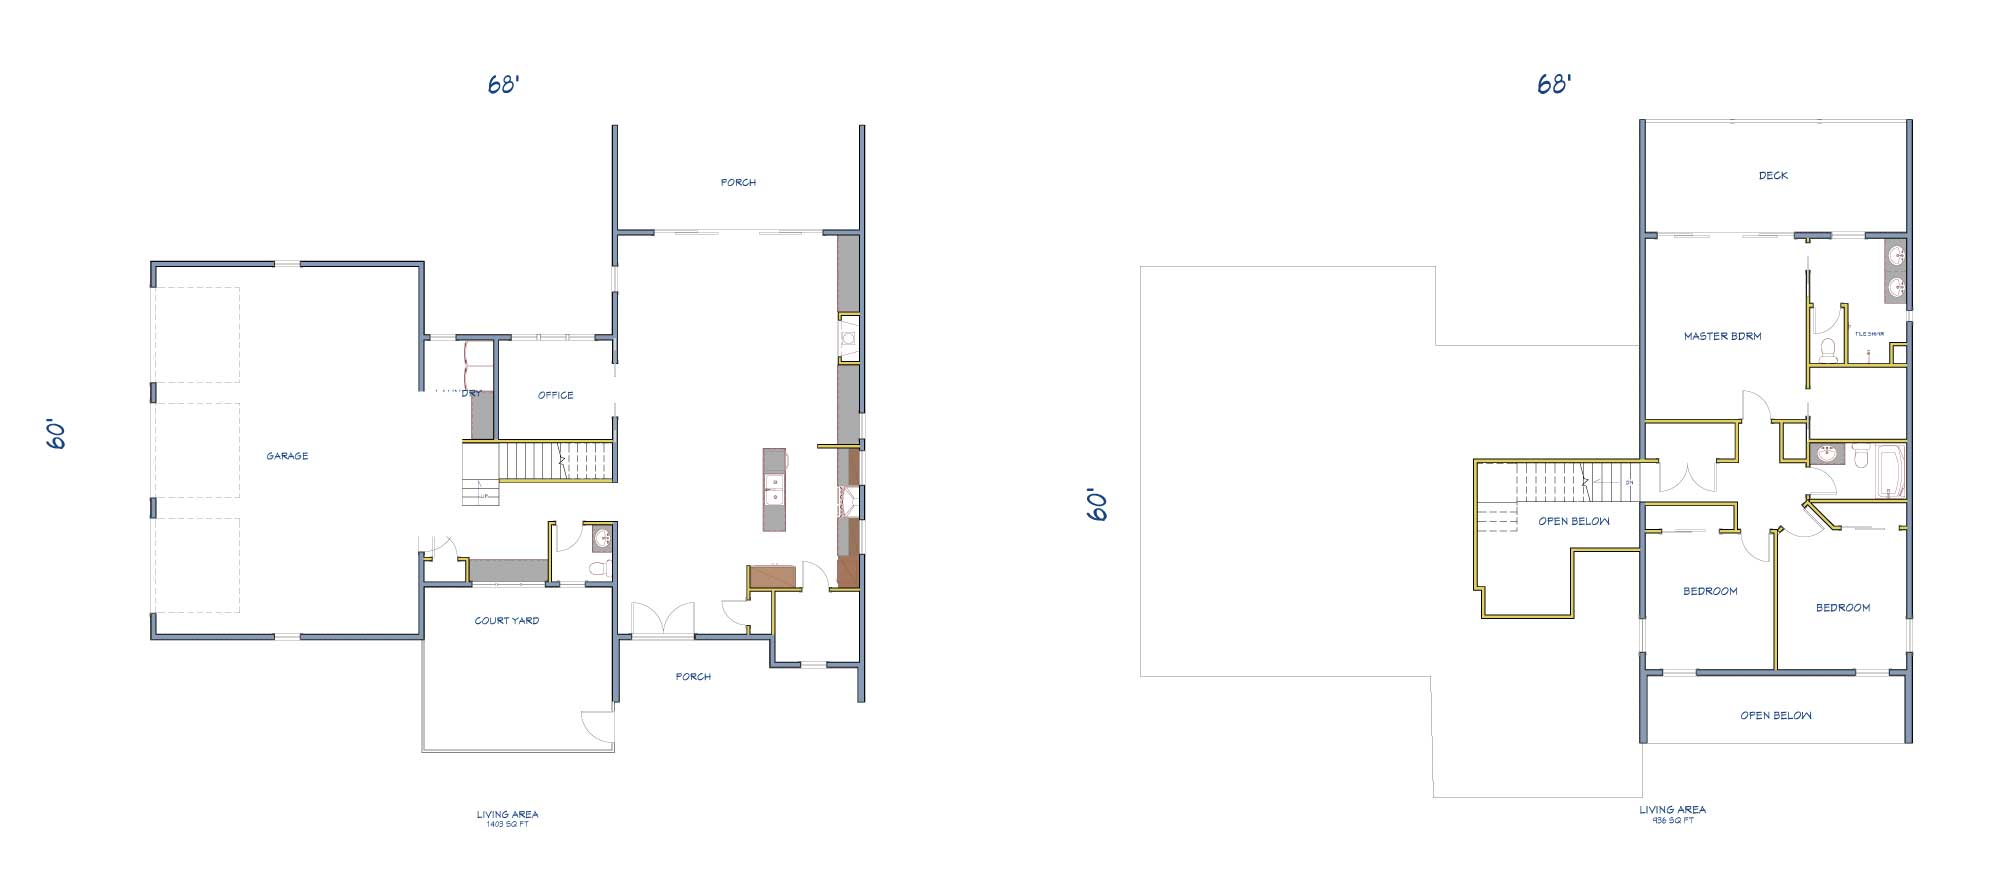 22-031-farmhouse-floorplan